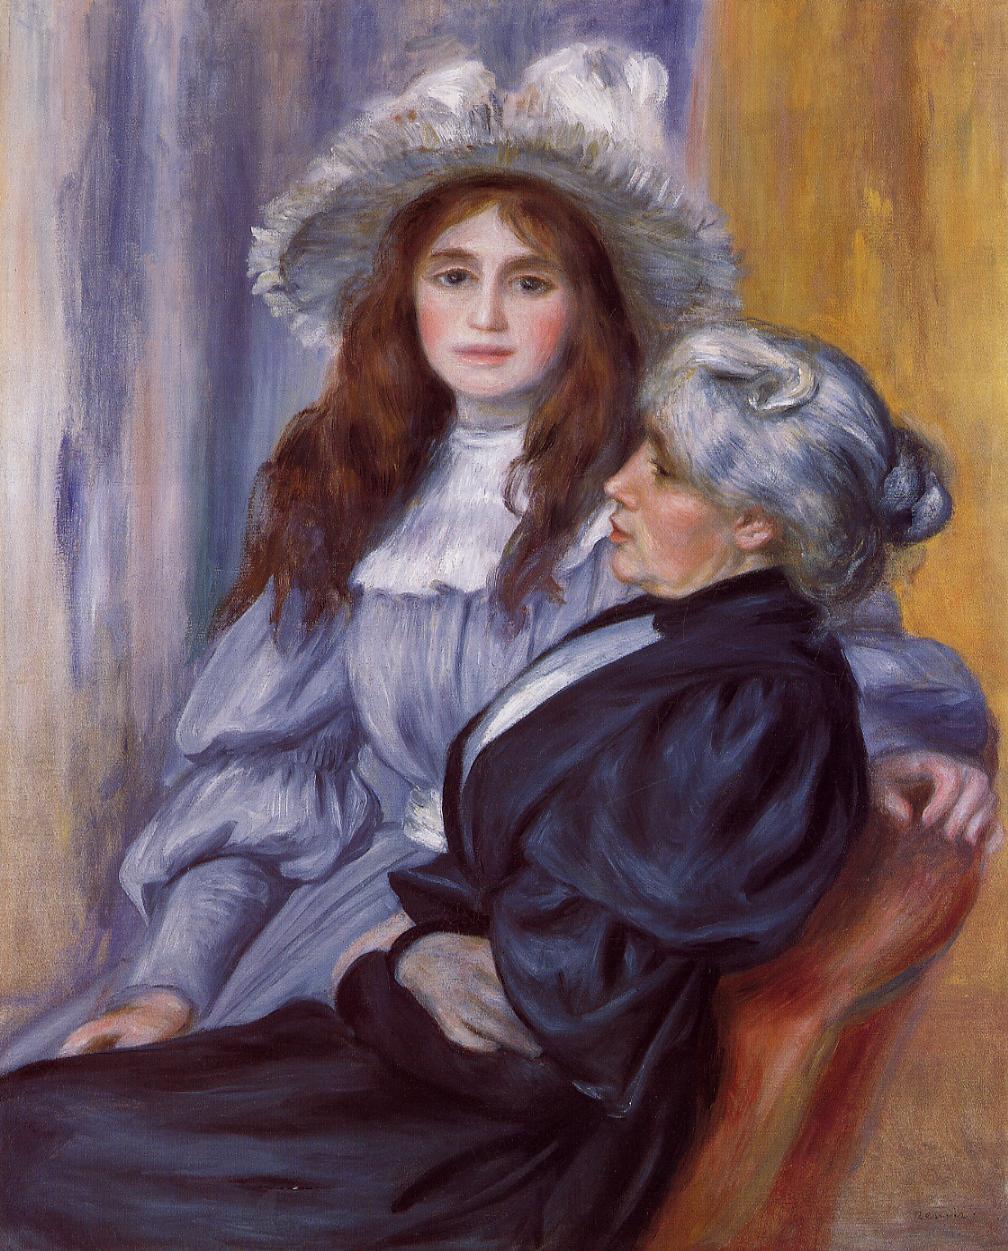 Berthe Morisot and ihre Tochter Julie Manet by Pierre-Auguste Renoir - 1894 - - Private Sammlung